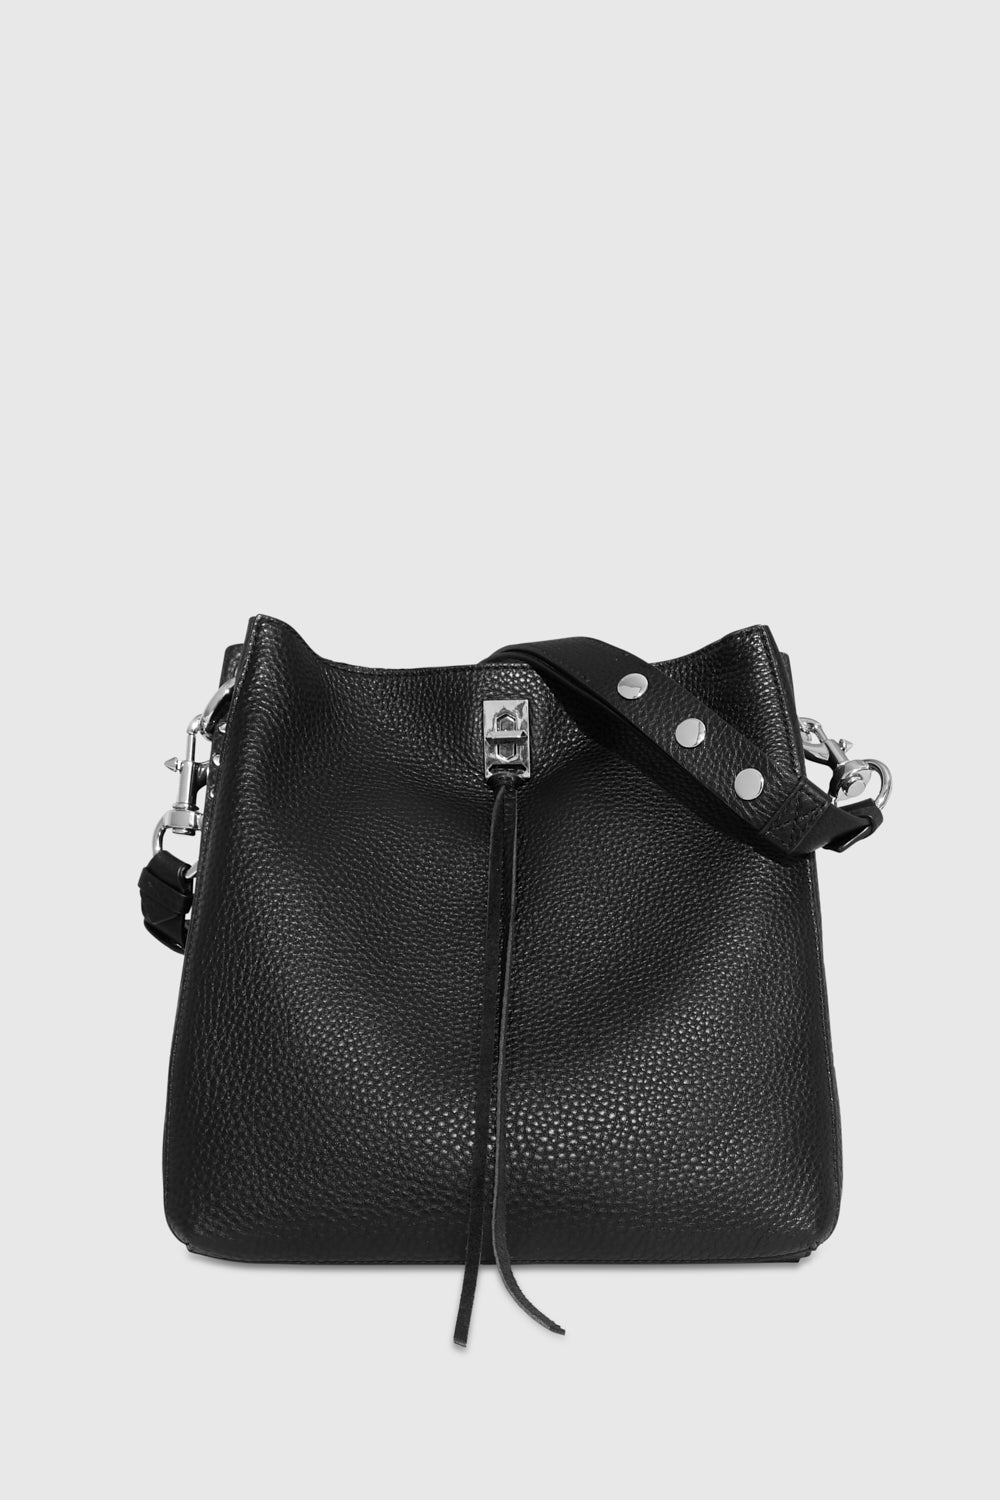 Rebecca Minkoff Darren Shoulder Bag In Black/silver